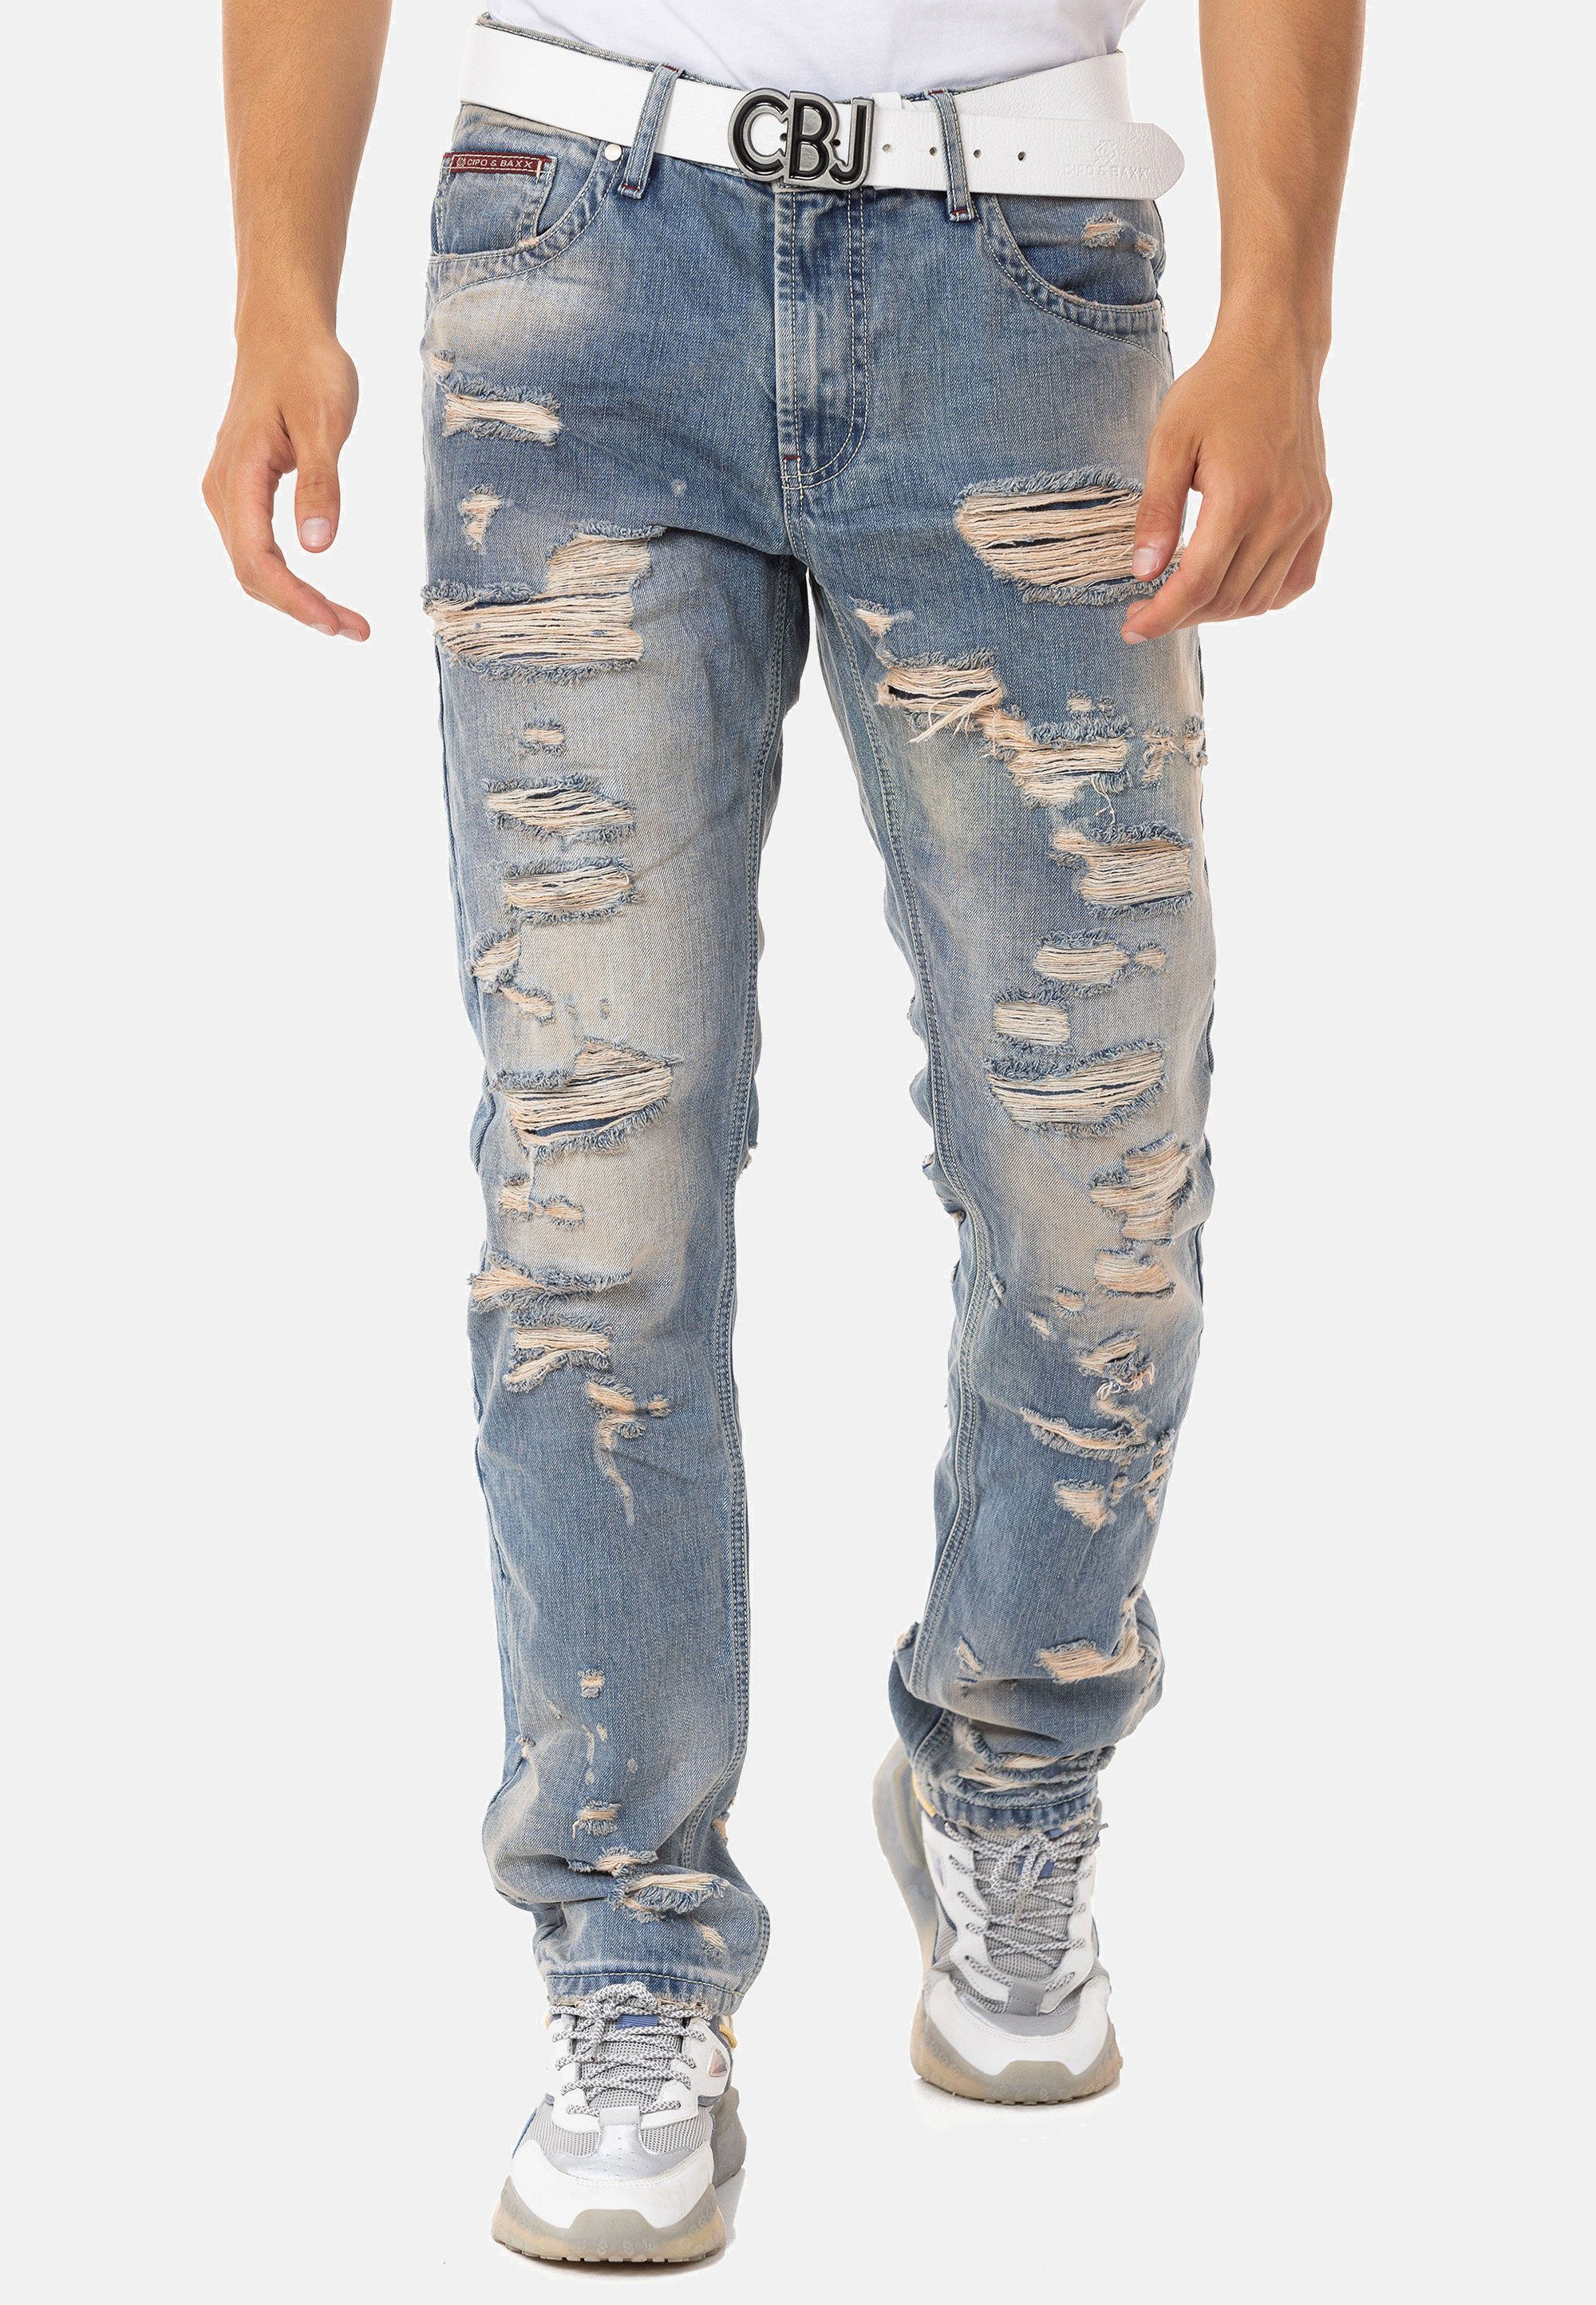 Cipo & Baxx Bequeme Jeans im coolen Destroyed-Look